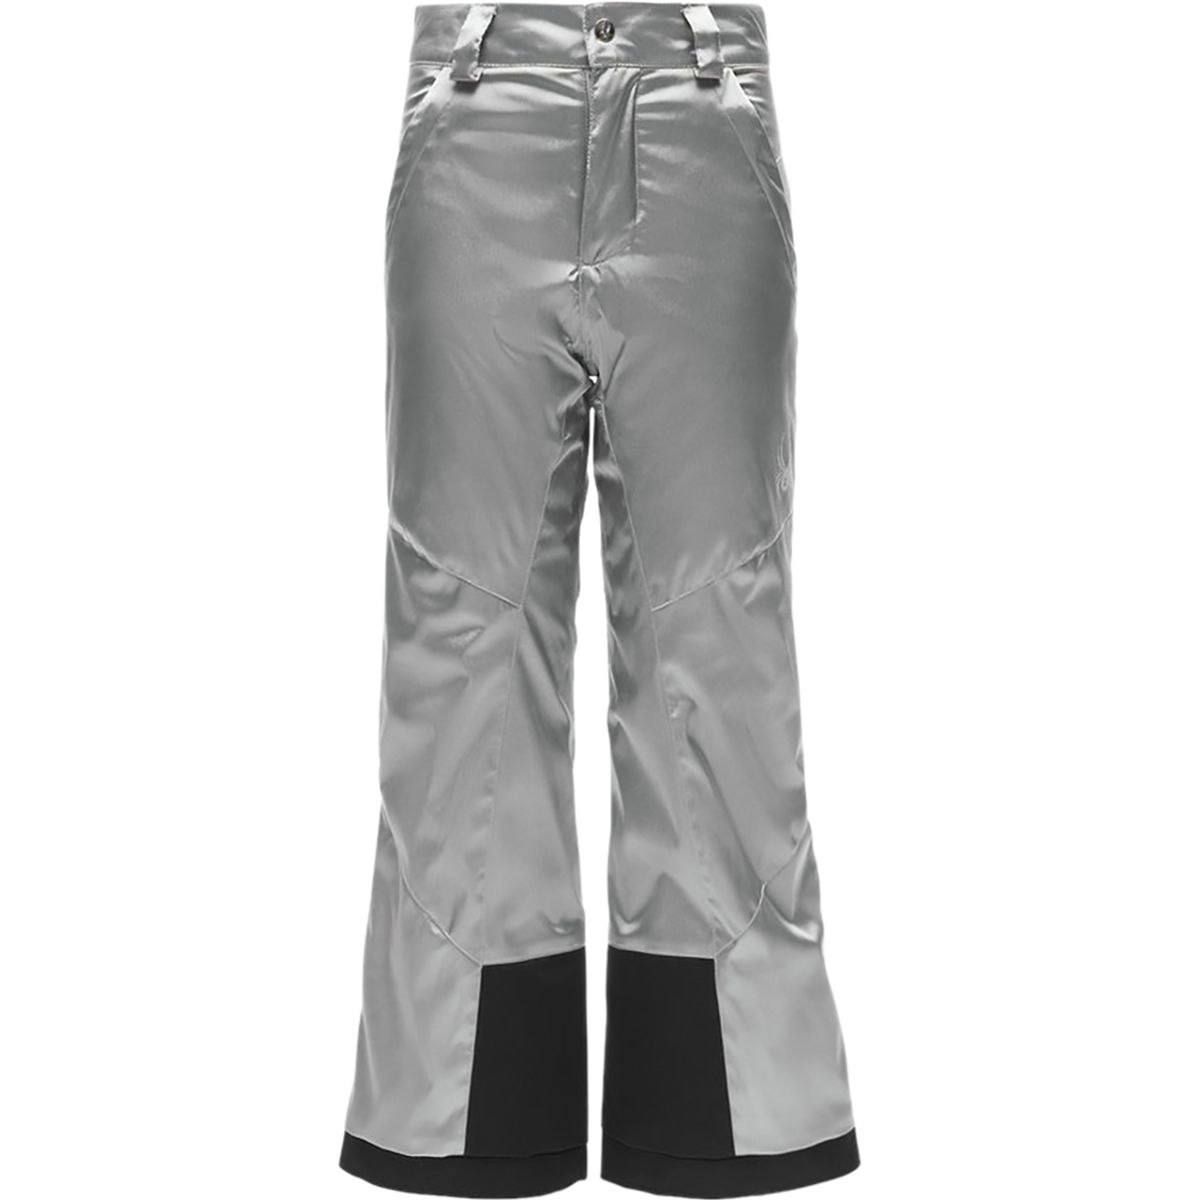 Spyder Olympia Regular Pant - Girls' Silver/Black